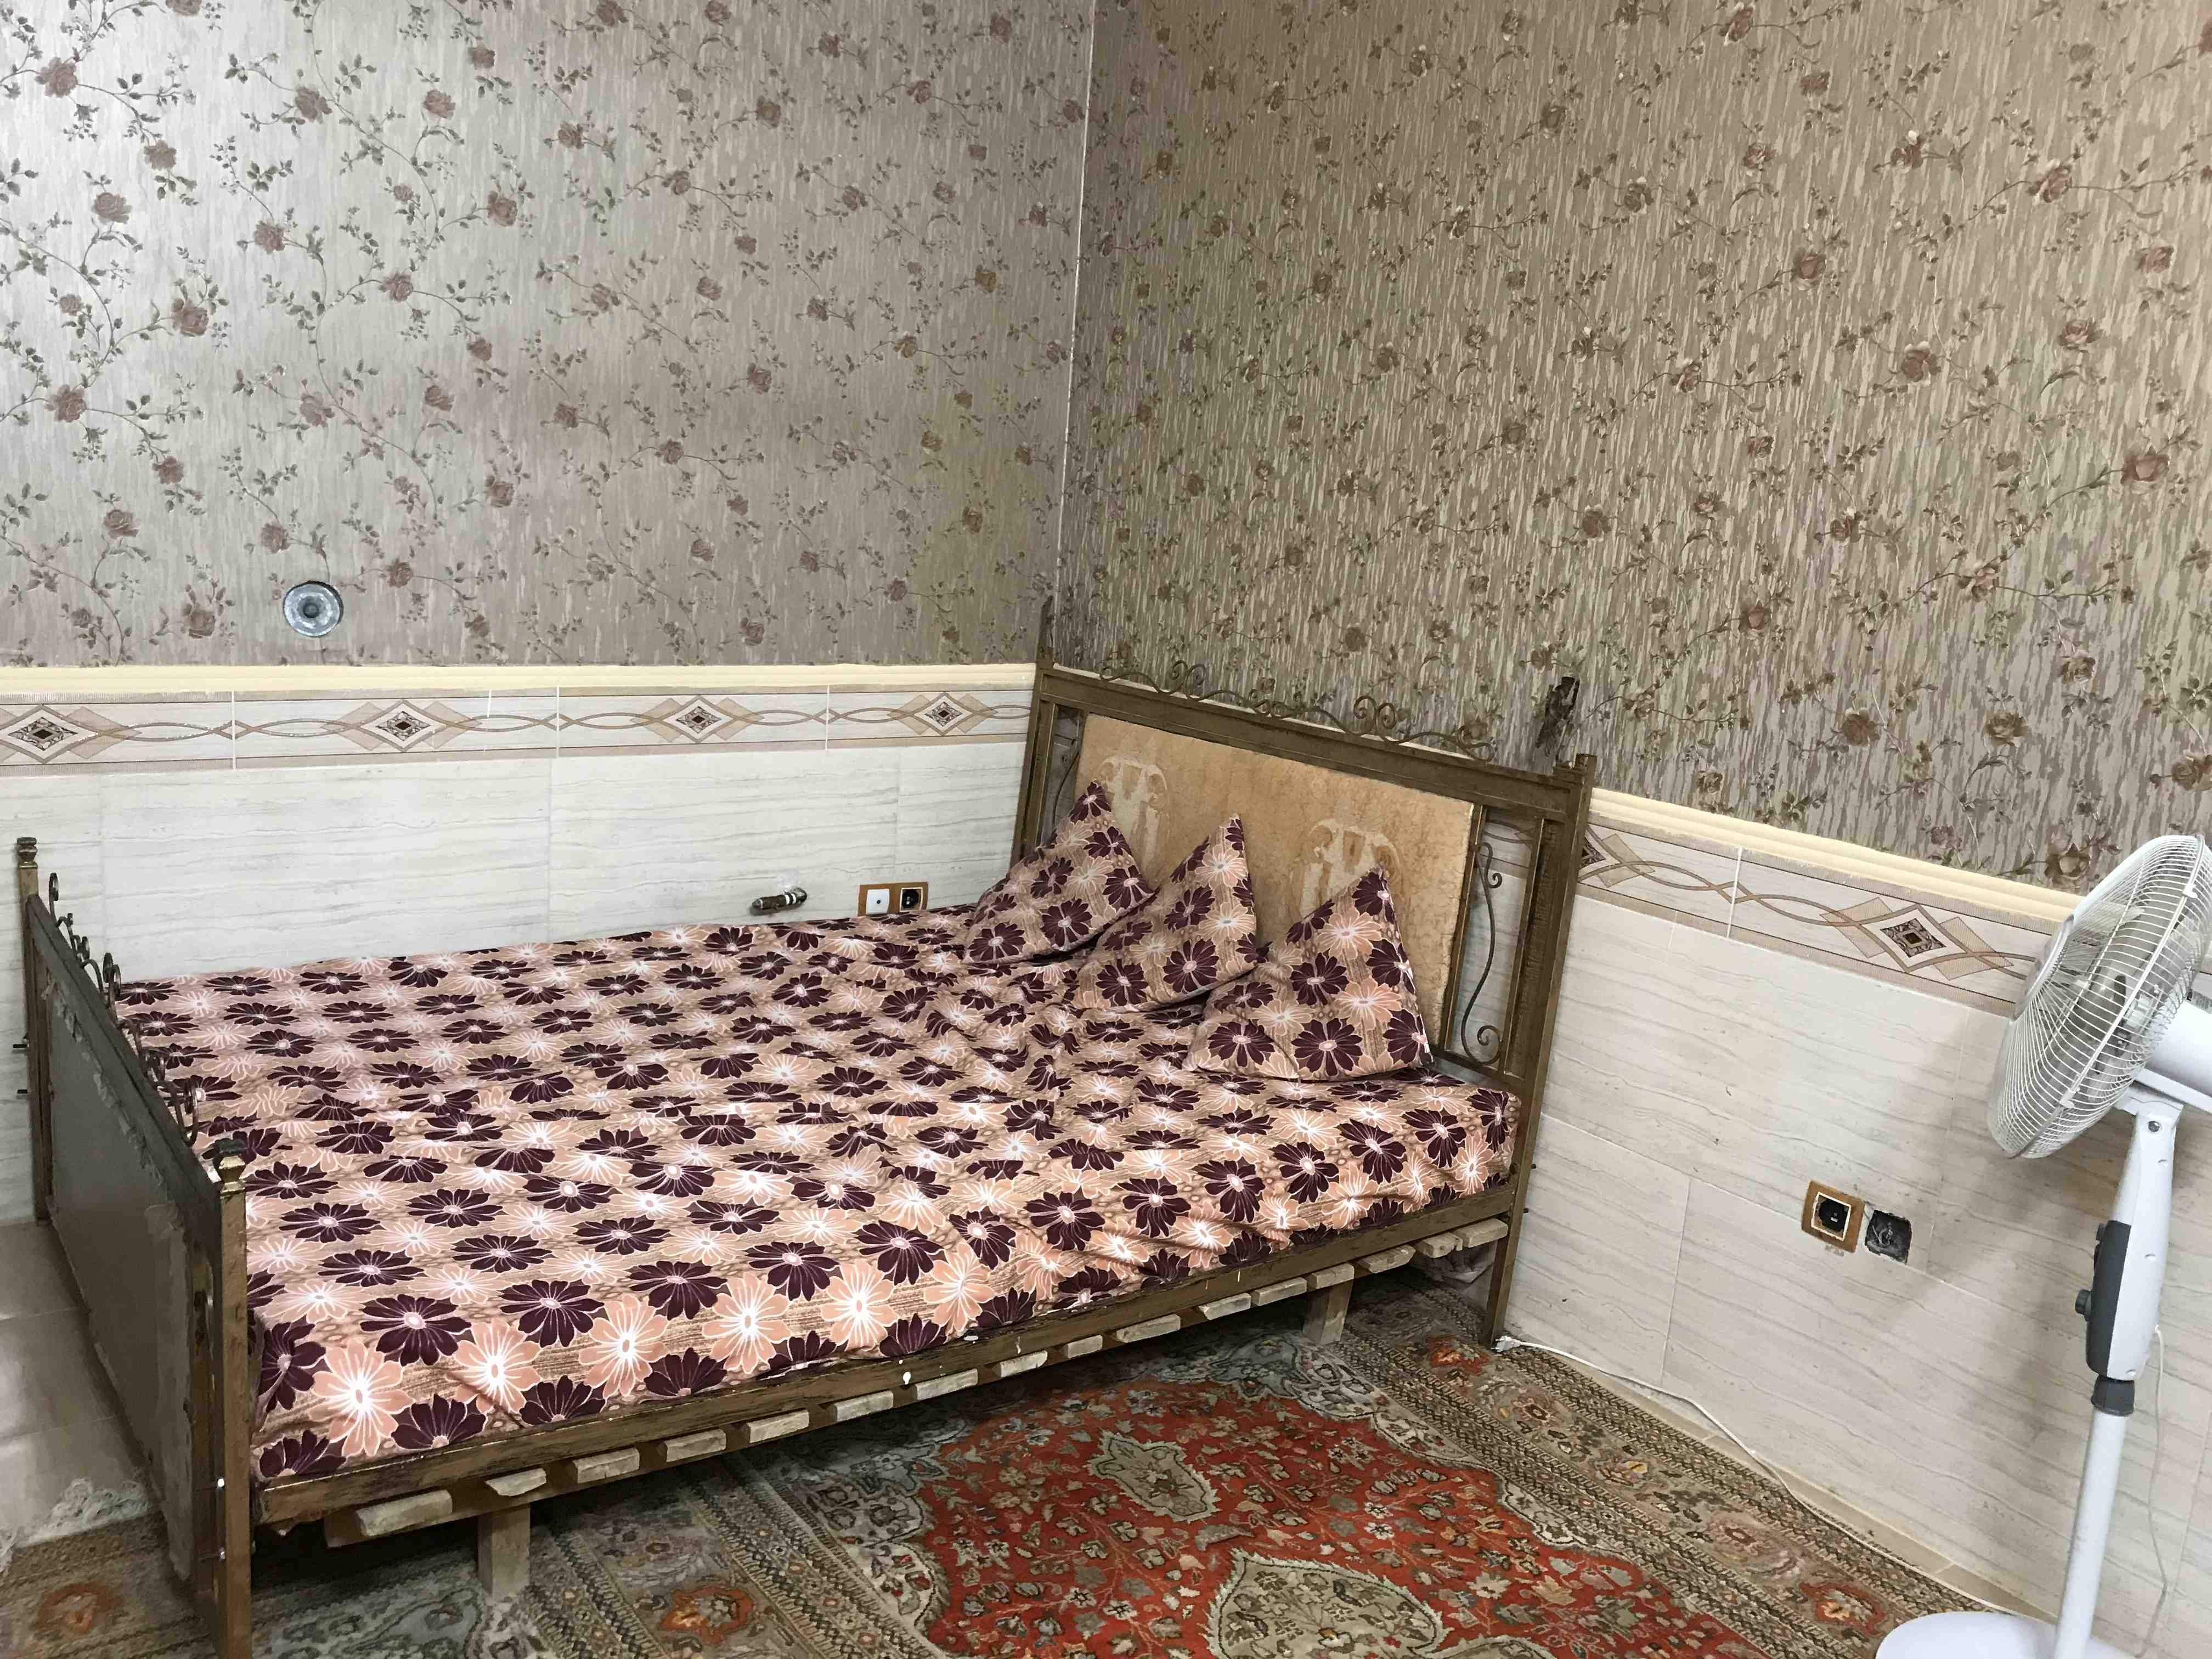 townee اجاره منزل ویلایی در عدالت شیراز